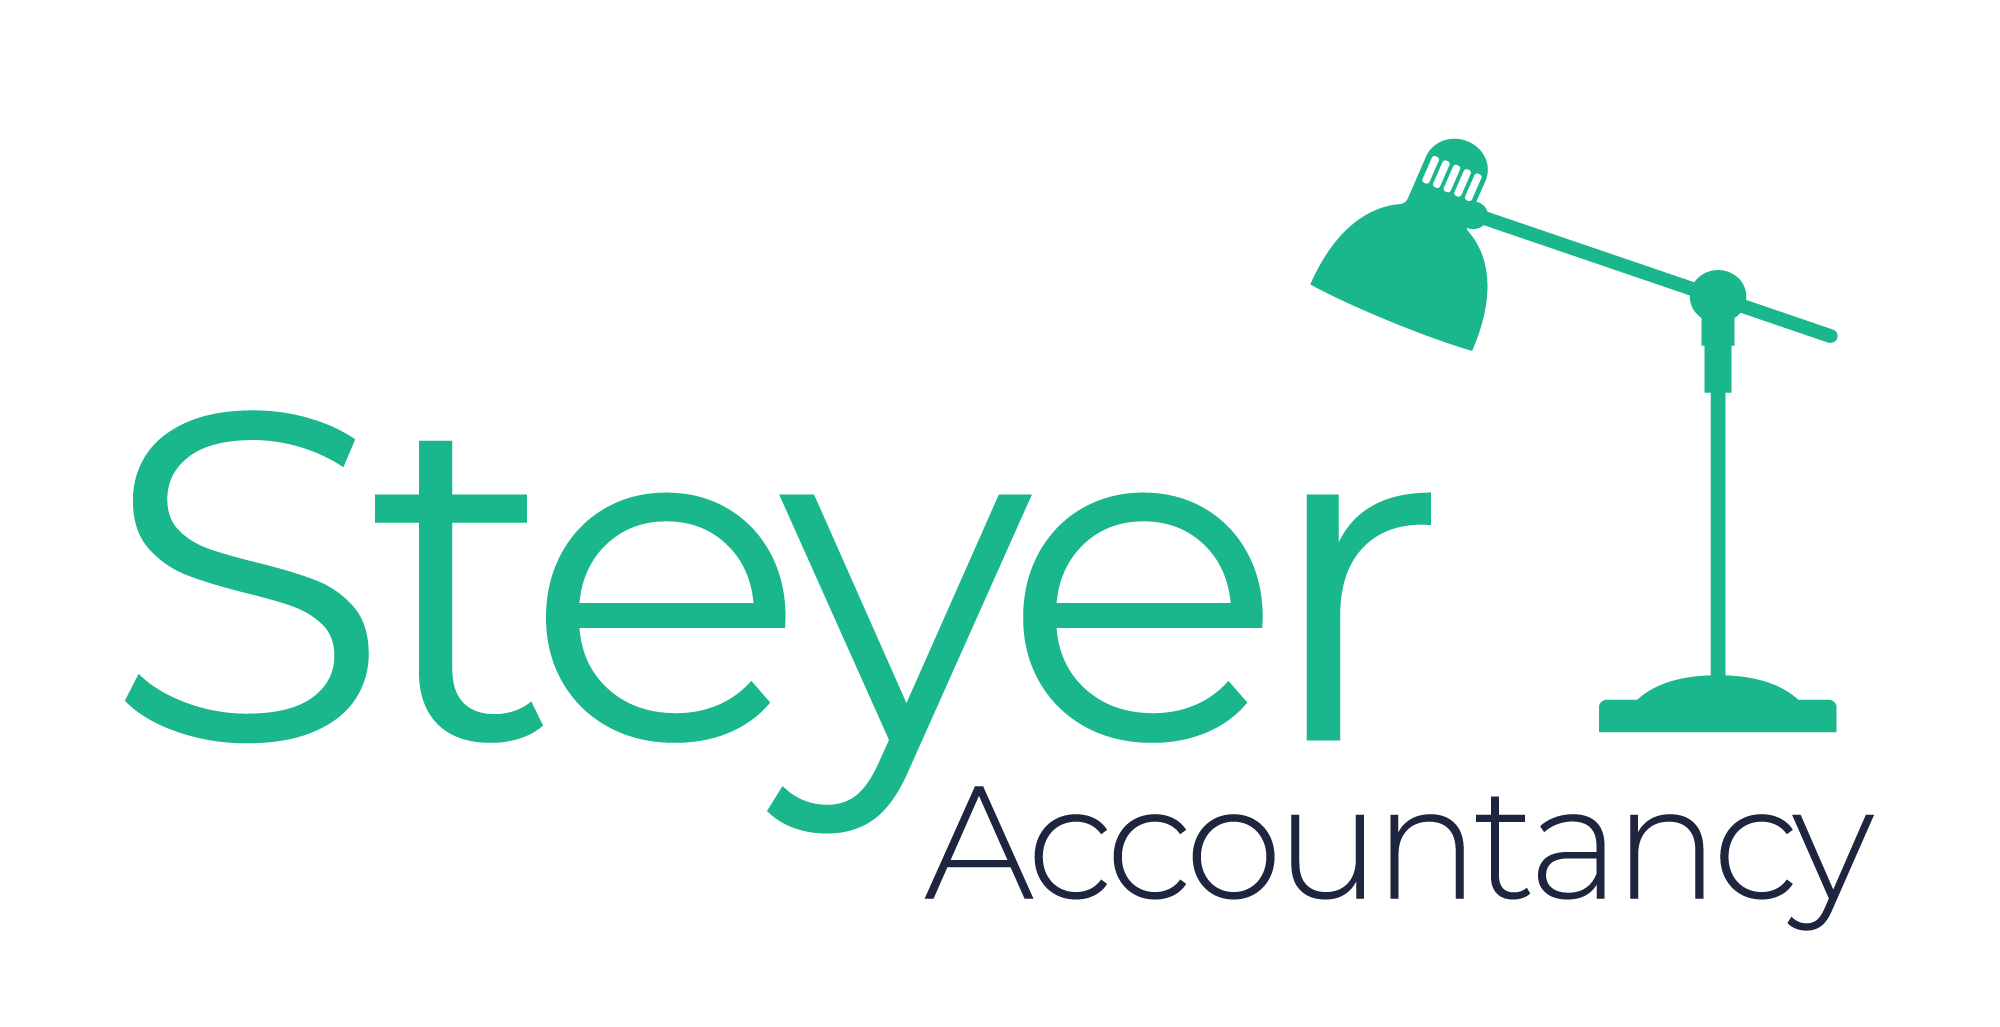 Steyer Accountancy